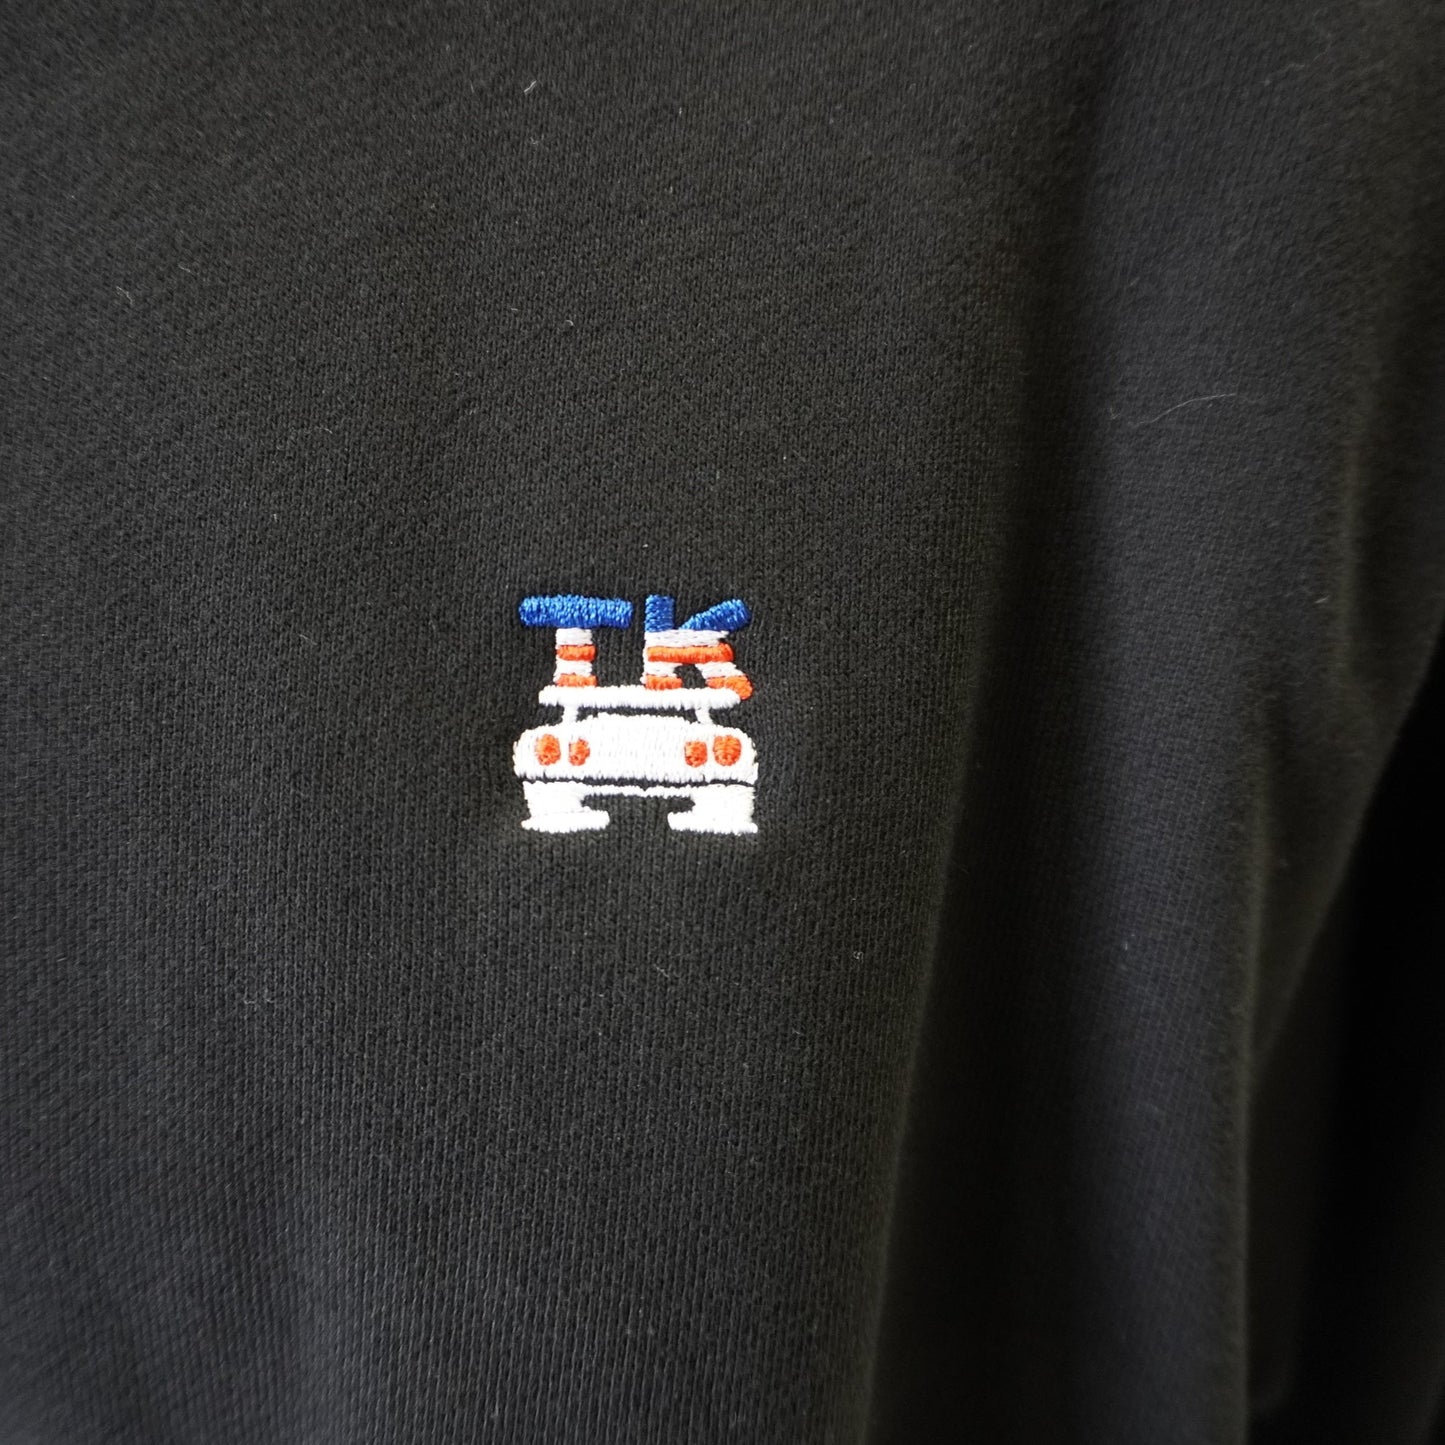 TKGT Sweater (Navy)